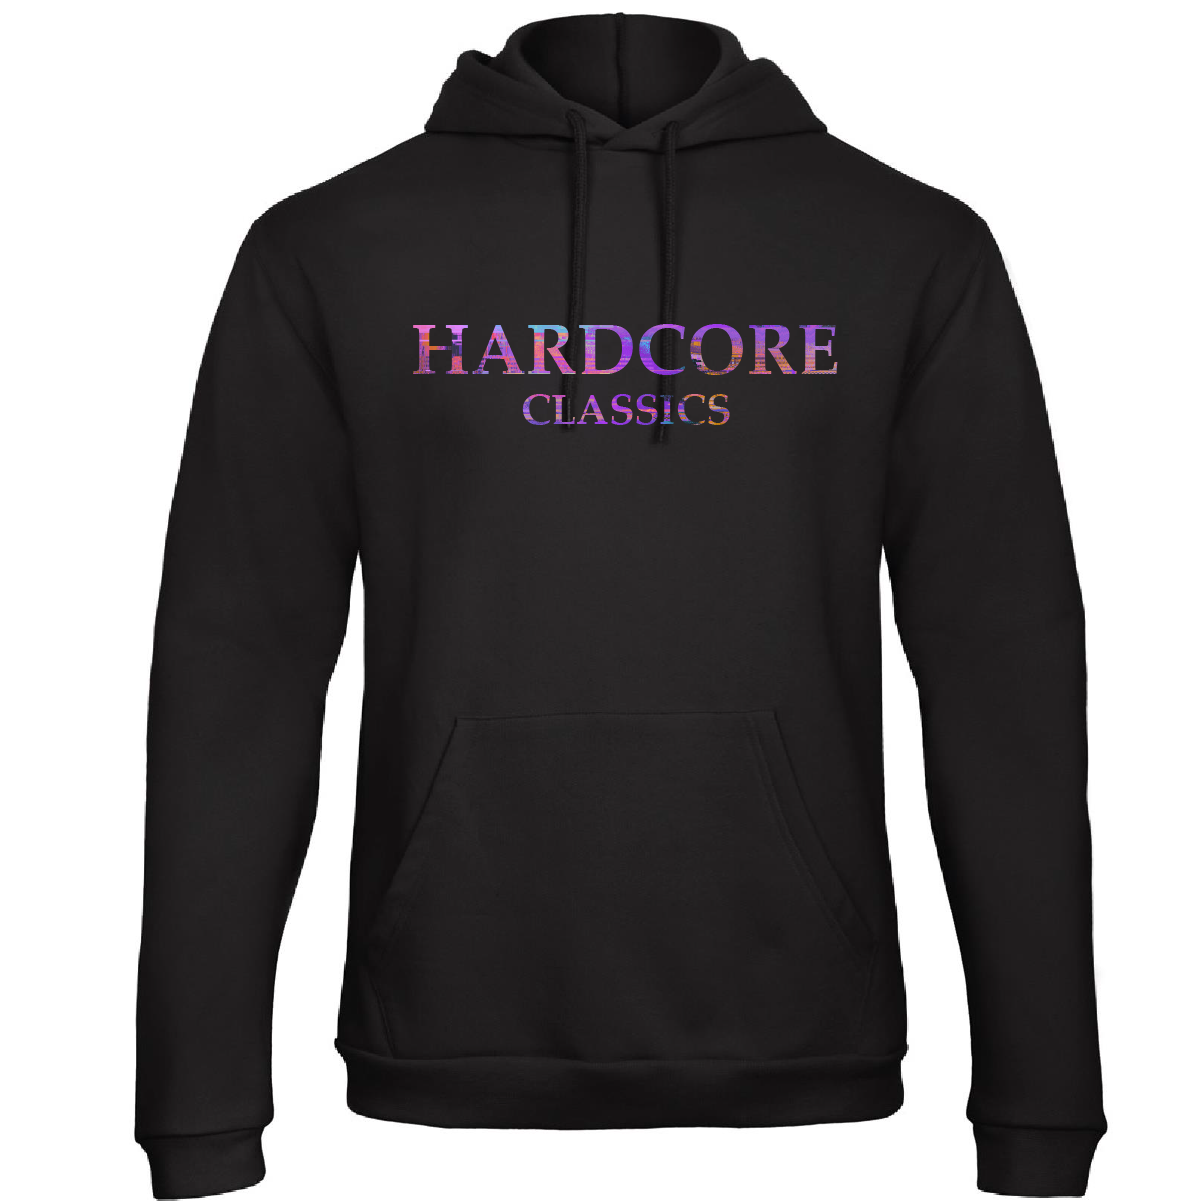 Hardcore classics hooded sweater